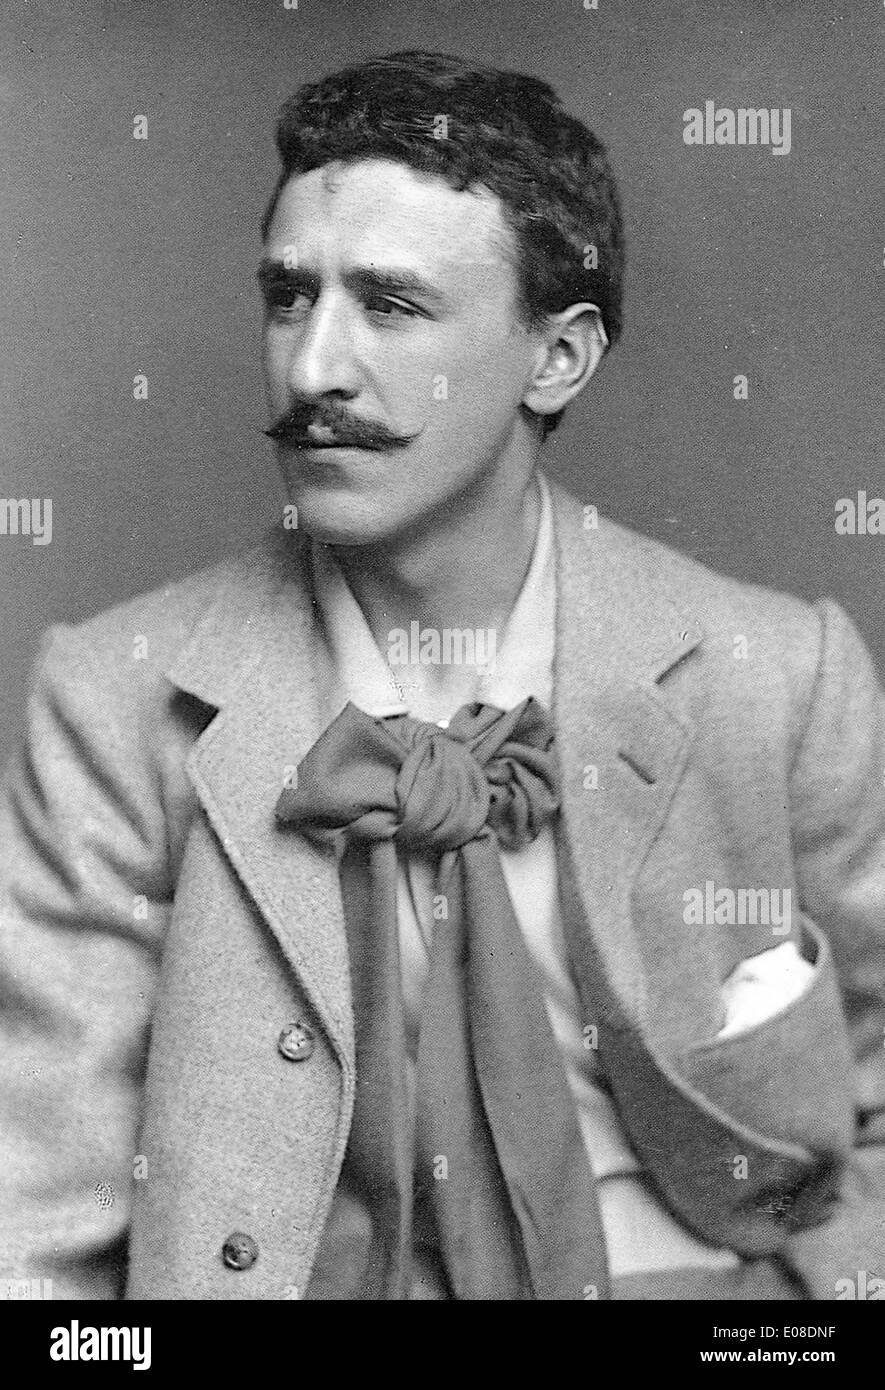 Charles Rennie Mackintosh, Scottish architect and artist. Stock Photo